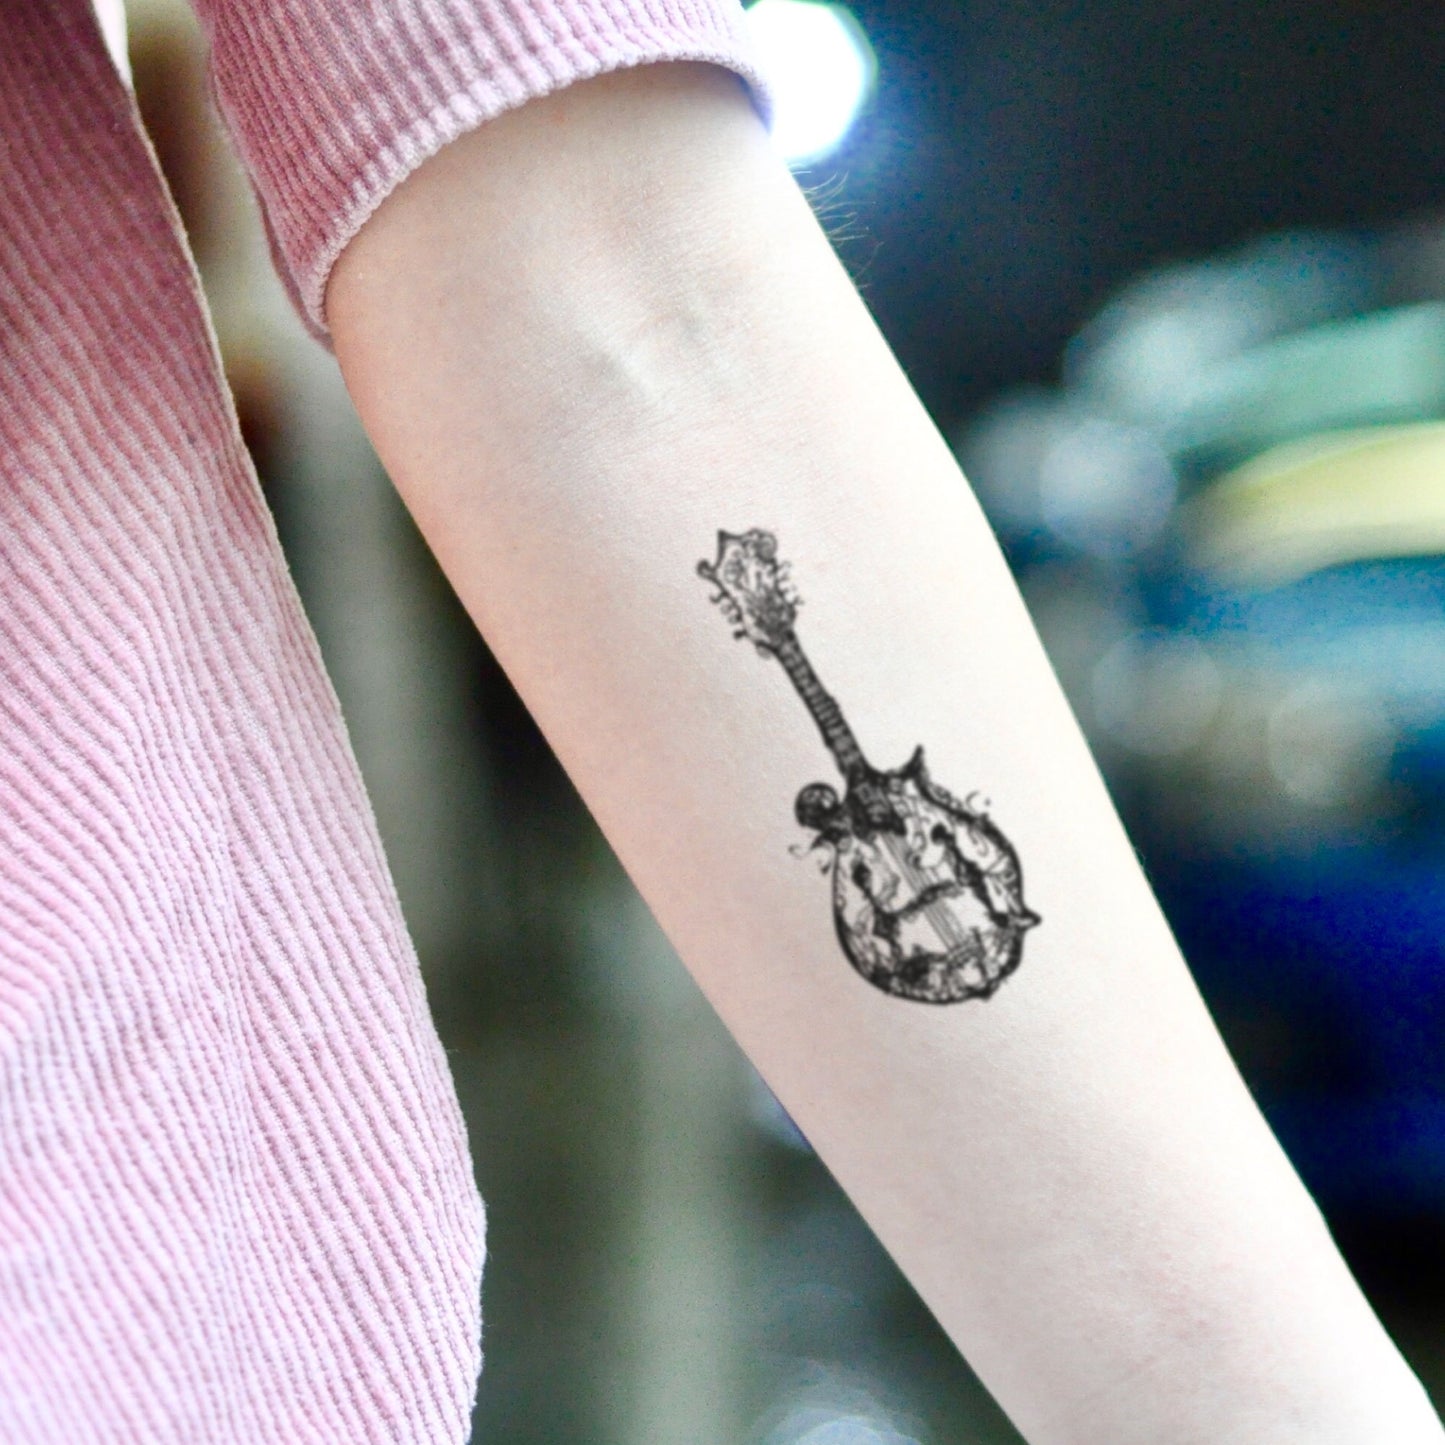 fake small mandolin music temporary tattoo sticker design idea on inner arm